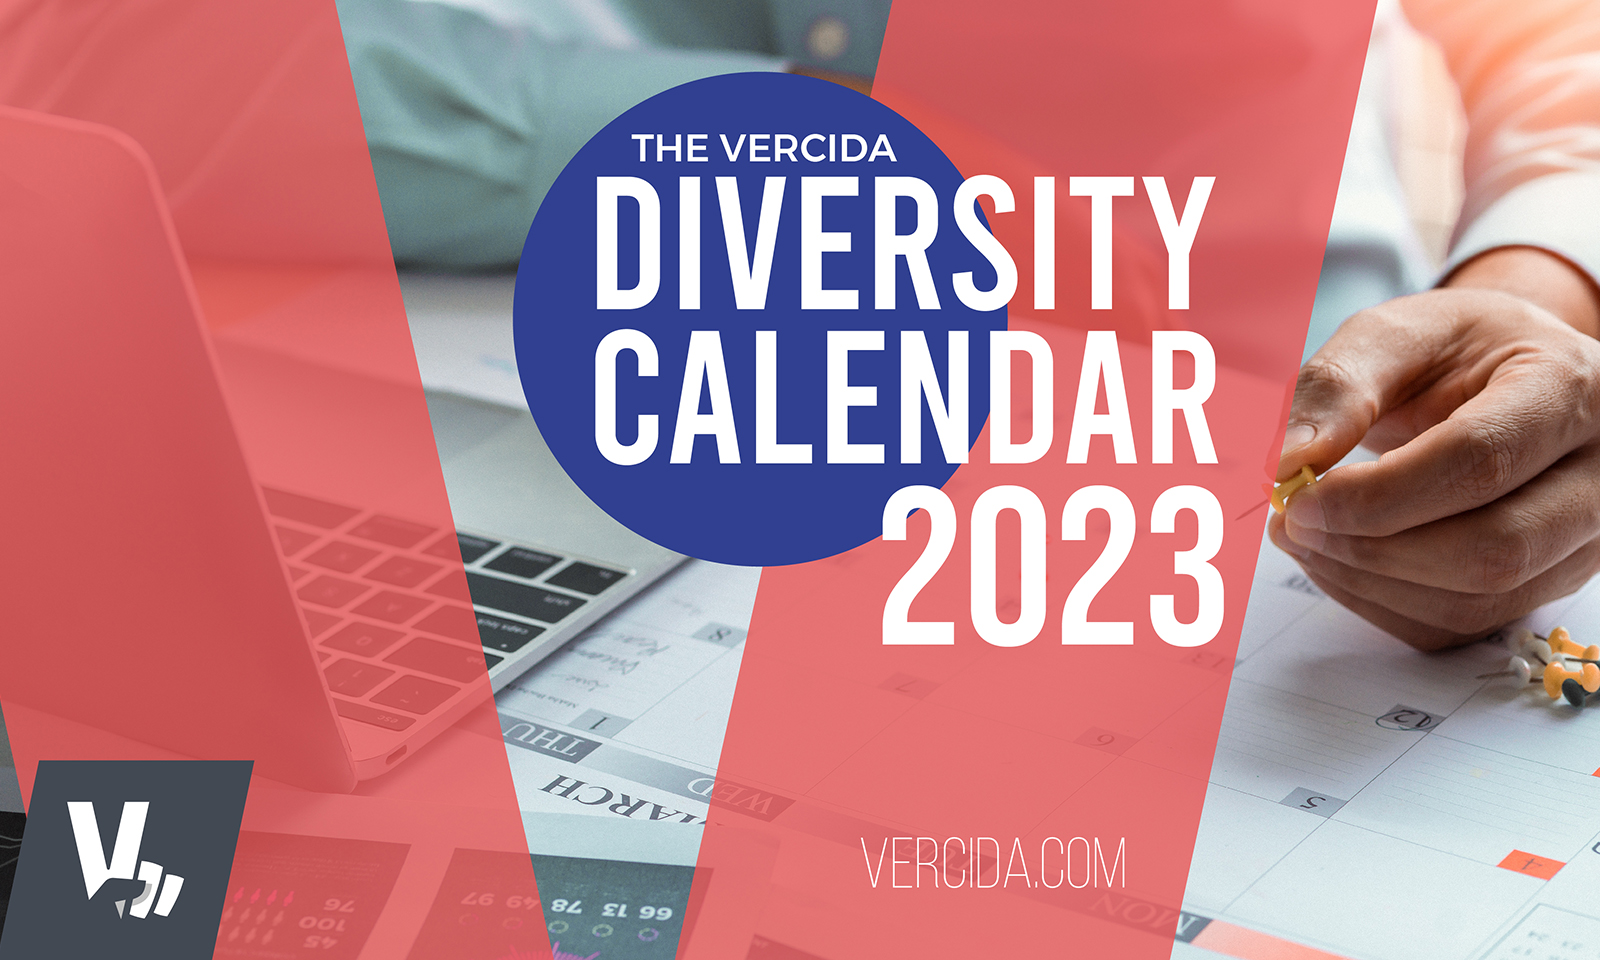 5th WCM Annual Diversity Week April 24-29, 2023